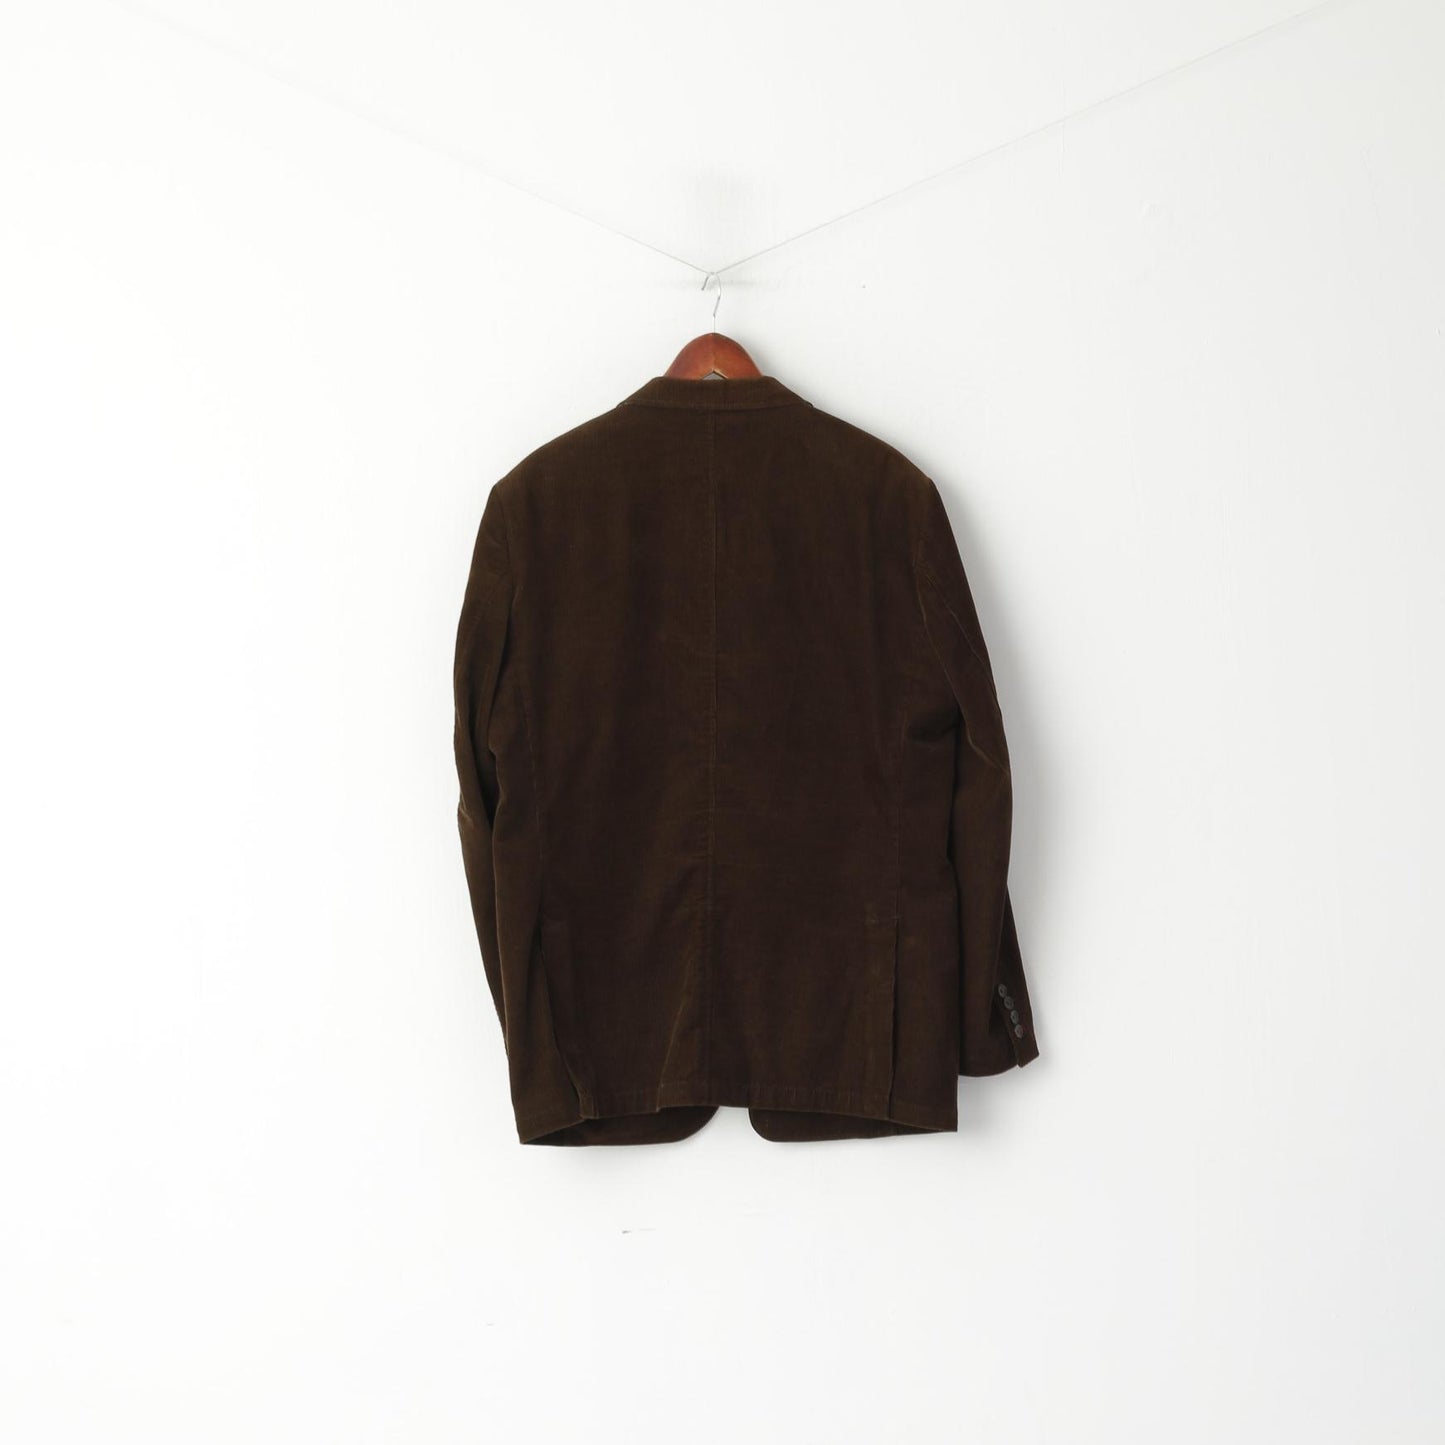 Charles Tyrwhitt Men 44 Blazer Brown Cotton Coruduroy Classic Fit Single Breasted Jacket